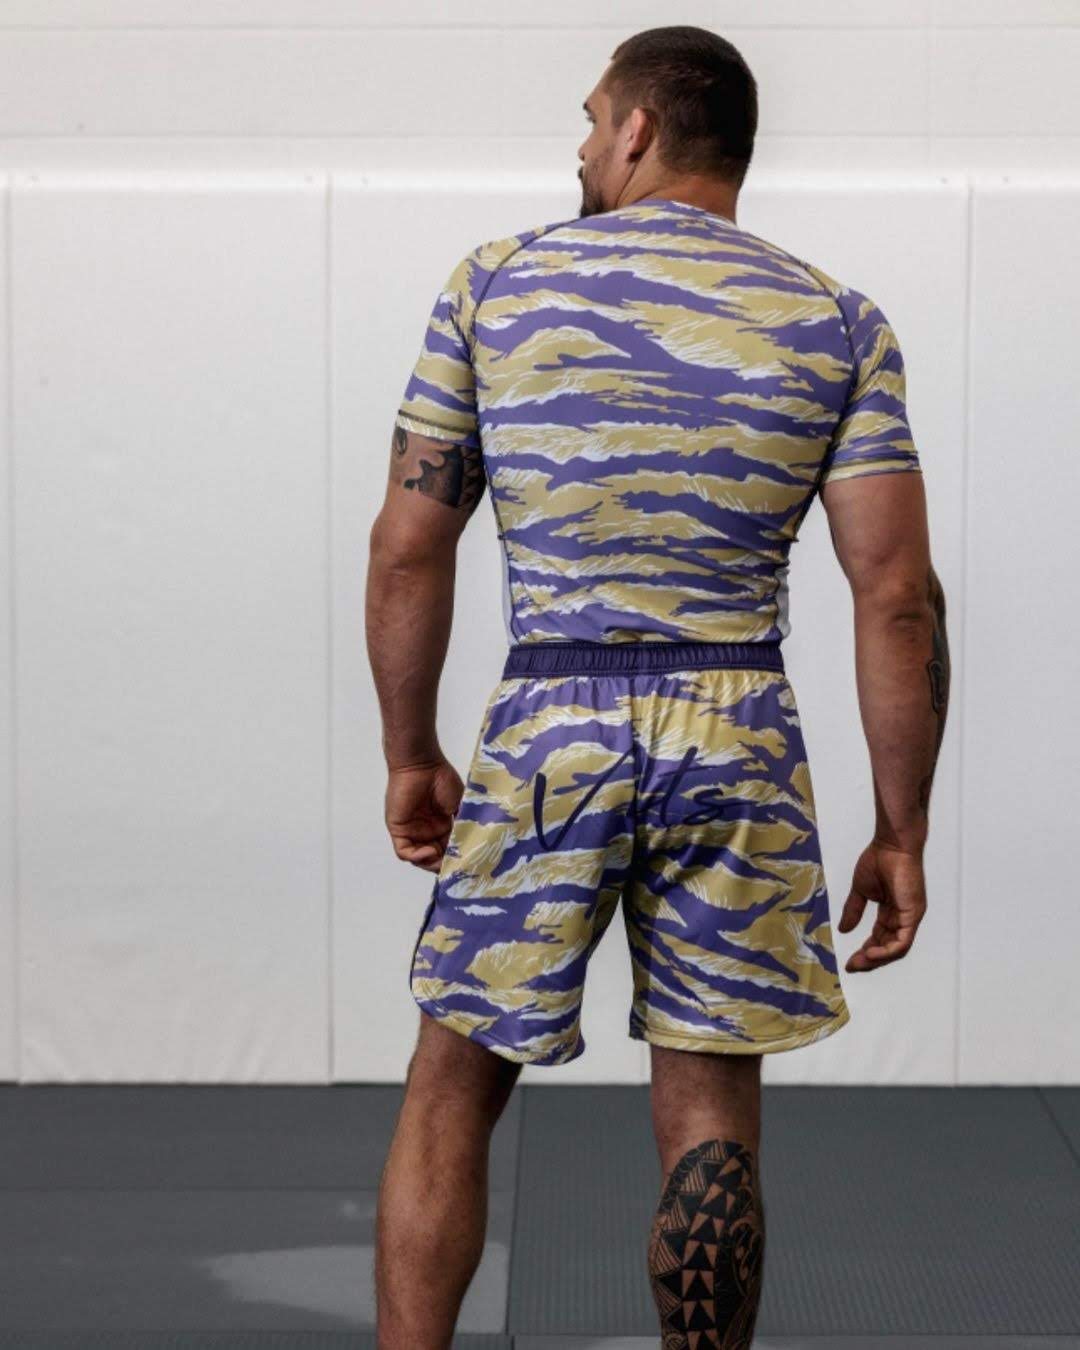 2023 Camo series “Tiger” short sleeves rash guard